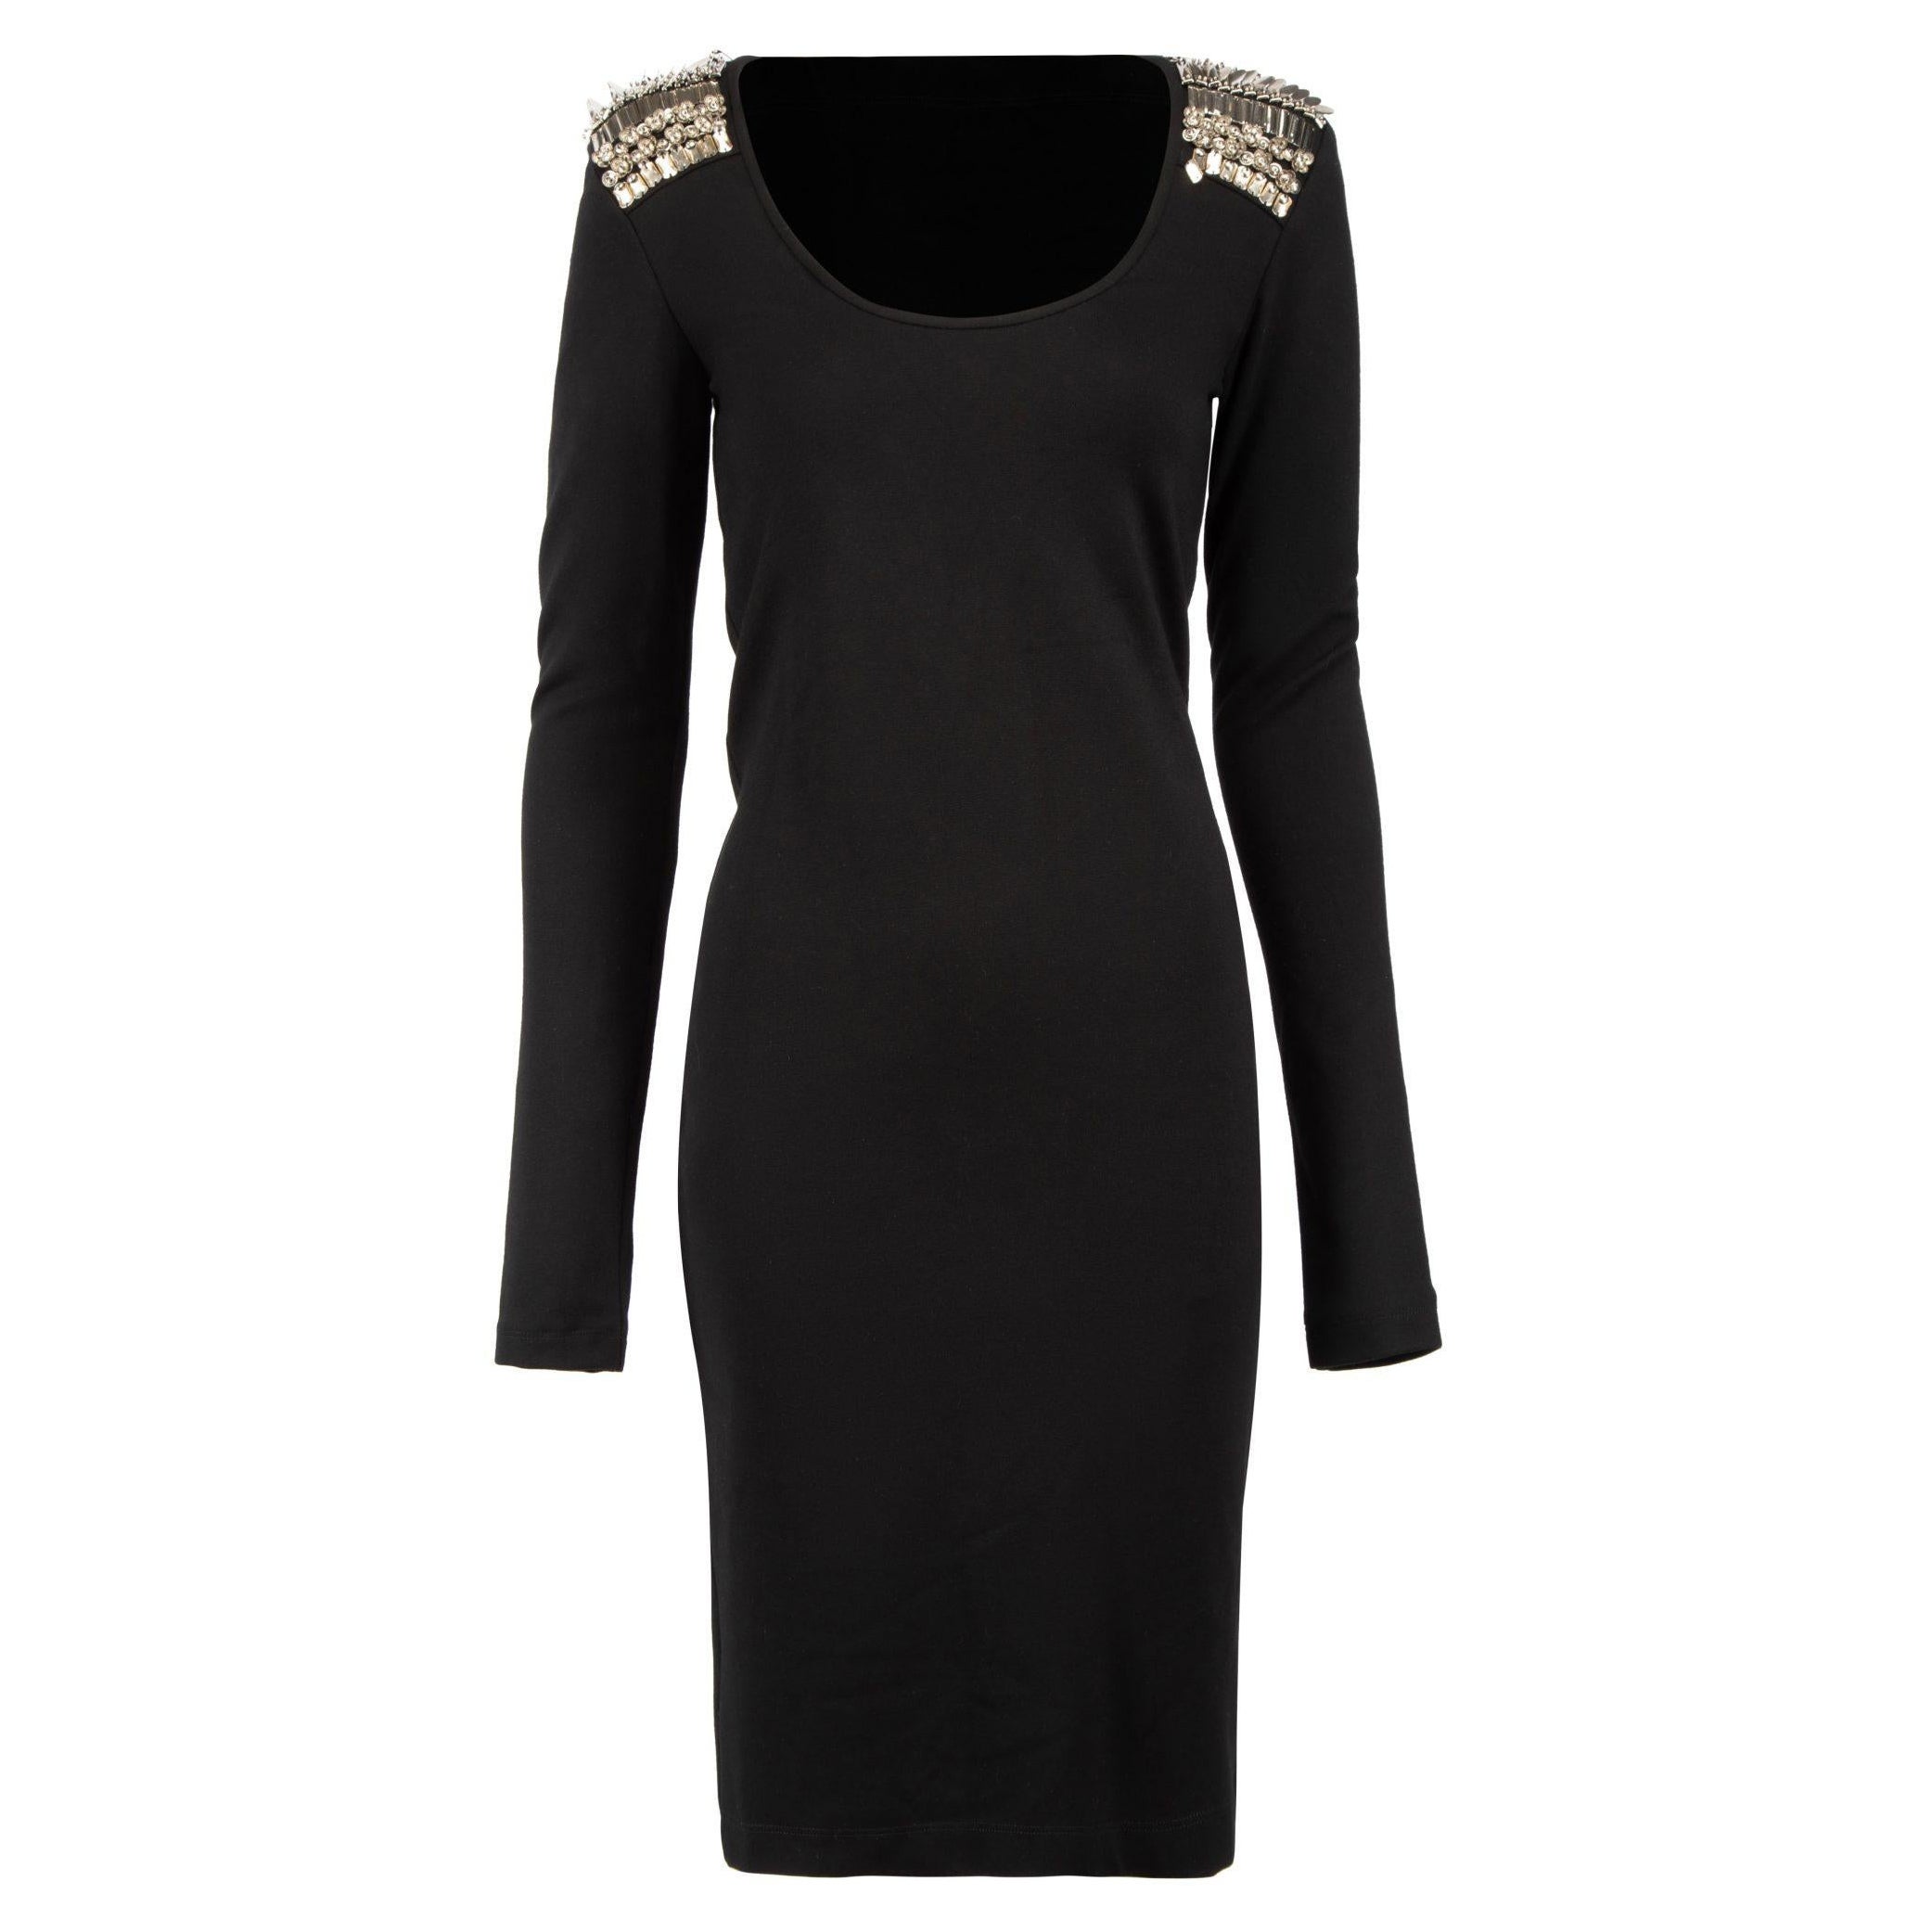 Alexander McQueen McQ 2013 Black Embellished Bodycon Dress Size M